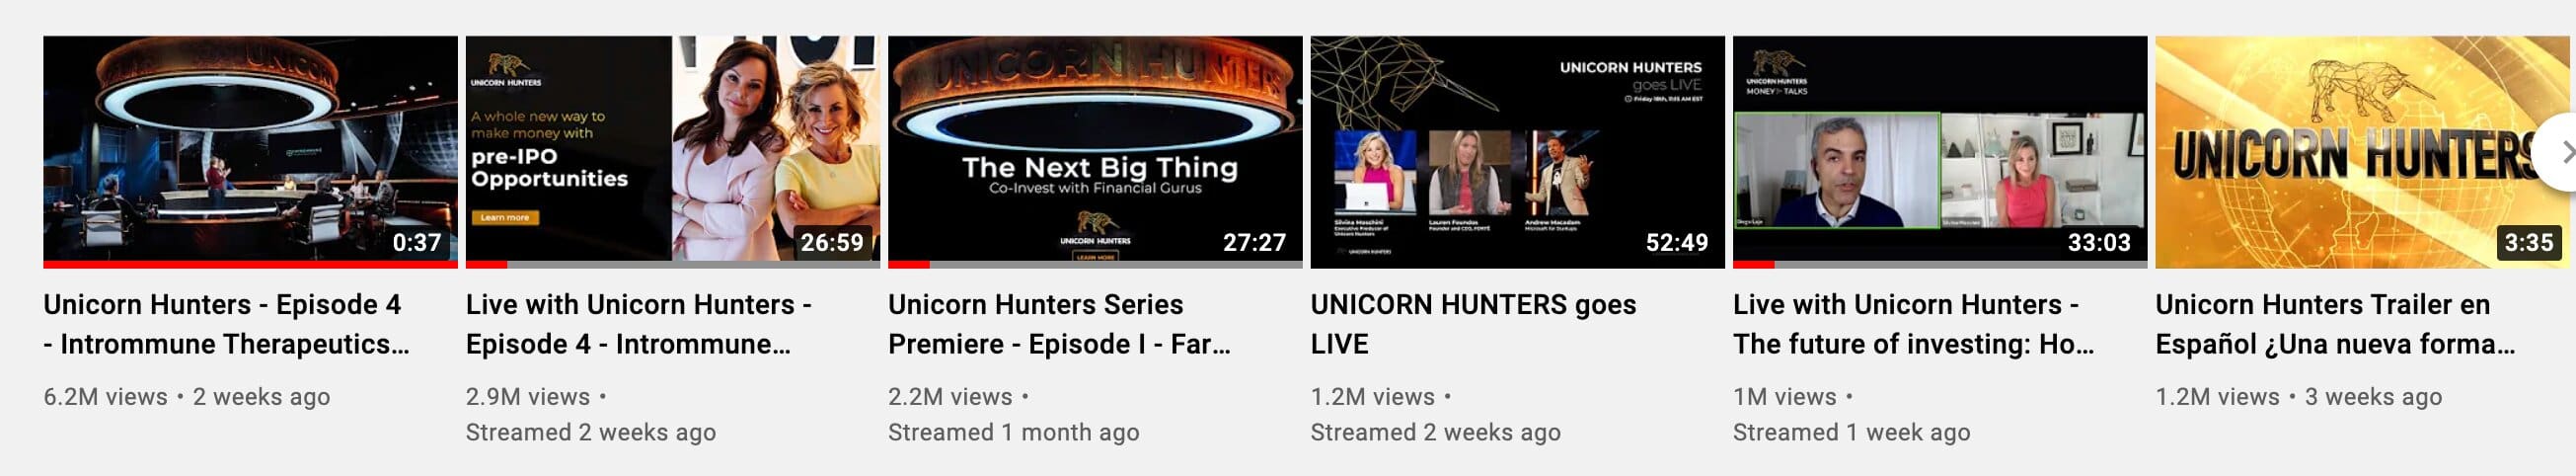 Unicorn Hunters News